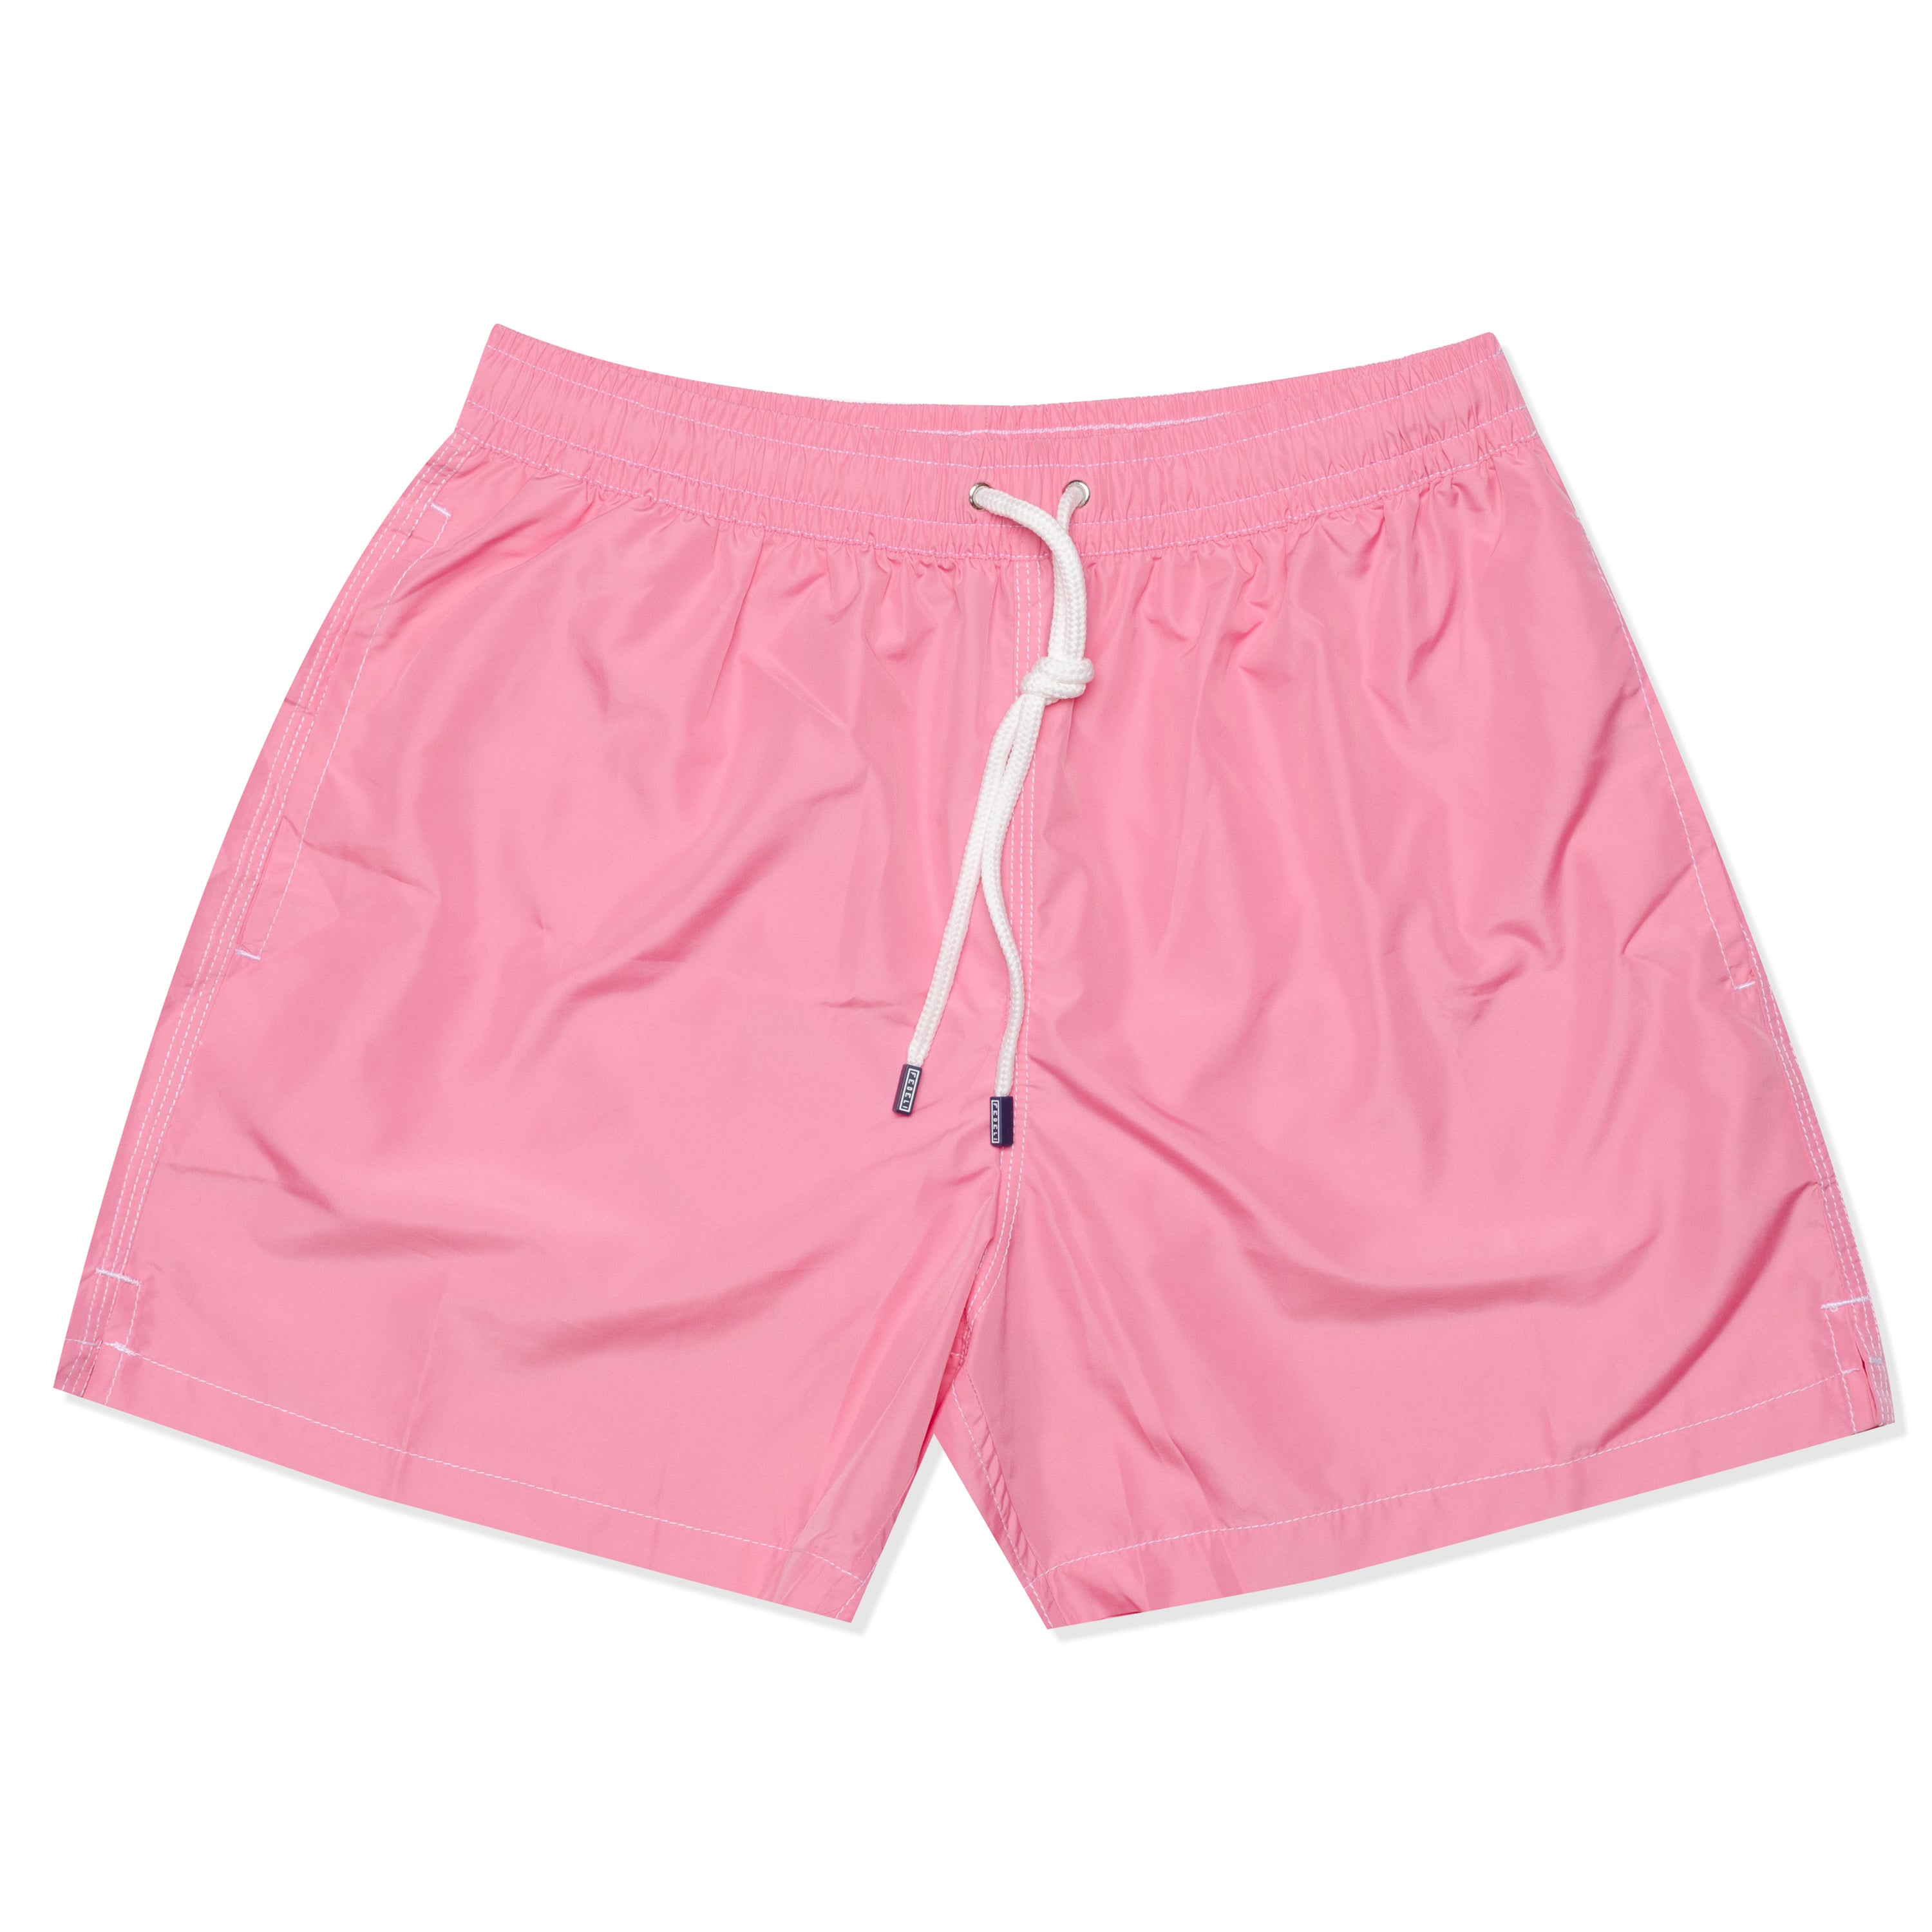 FEDELI Pink Madeira Airstop Swim Shorts Trunks NEW FEDELI